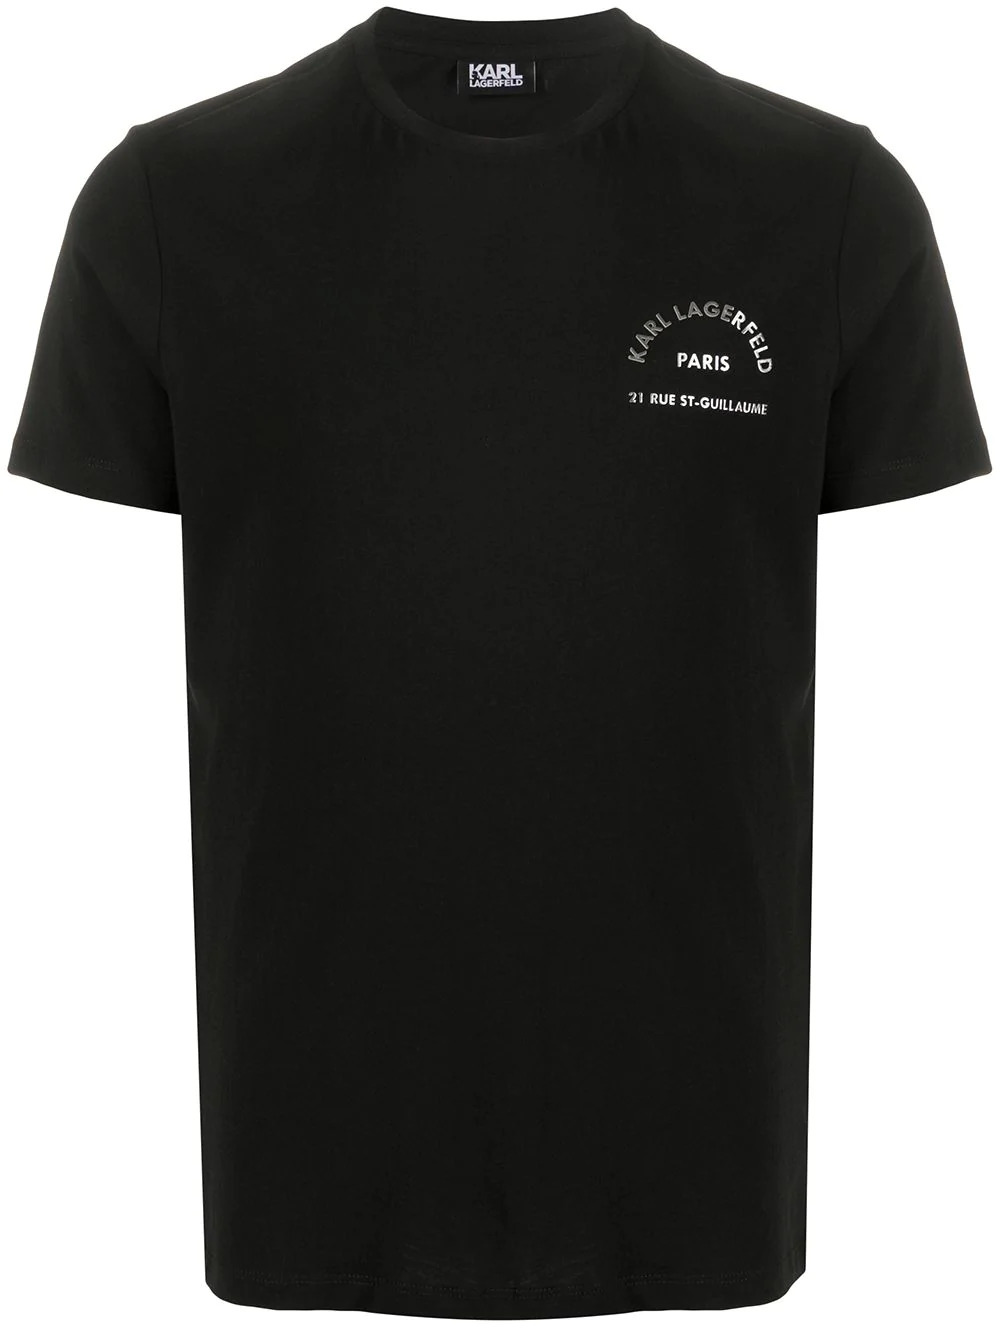 Karl Lagerfeld Black/Silver T-Shirt - Rogue